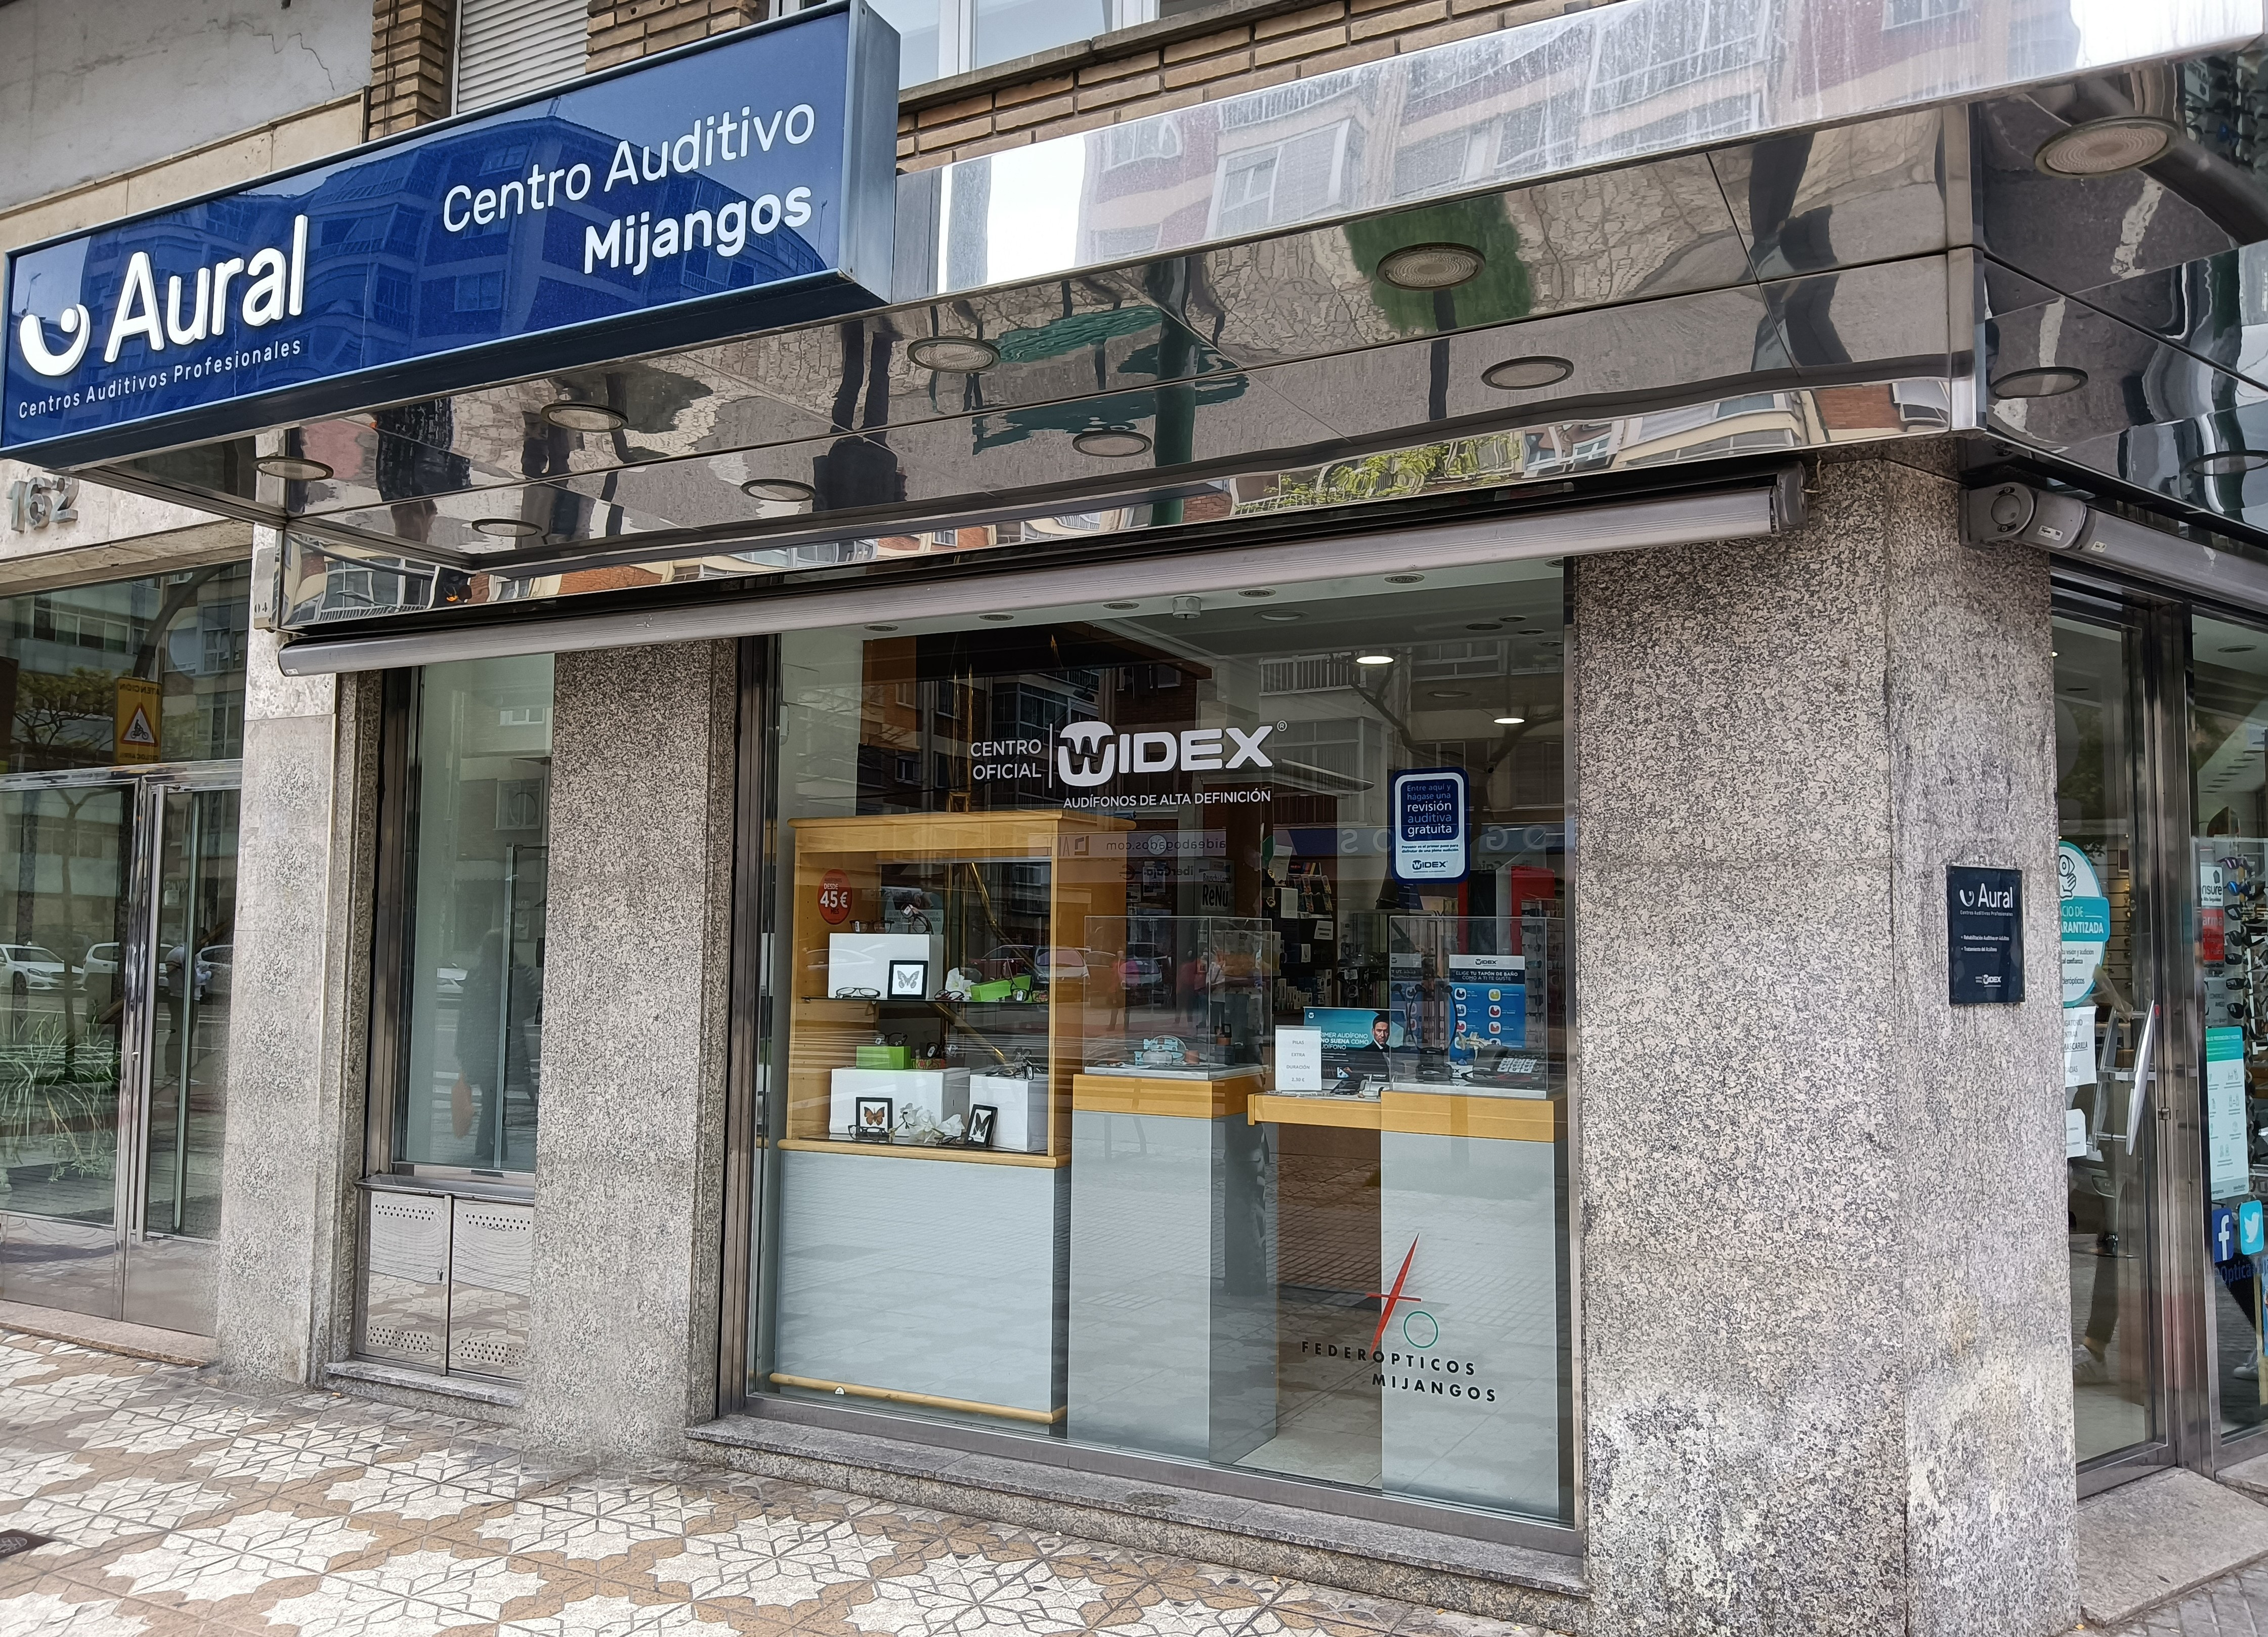 Aural Centro Auditivo Mijangos